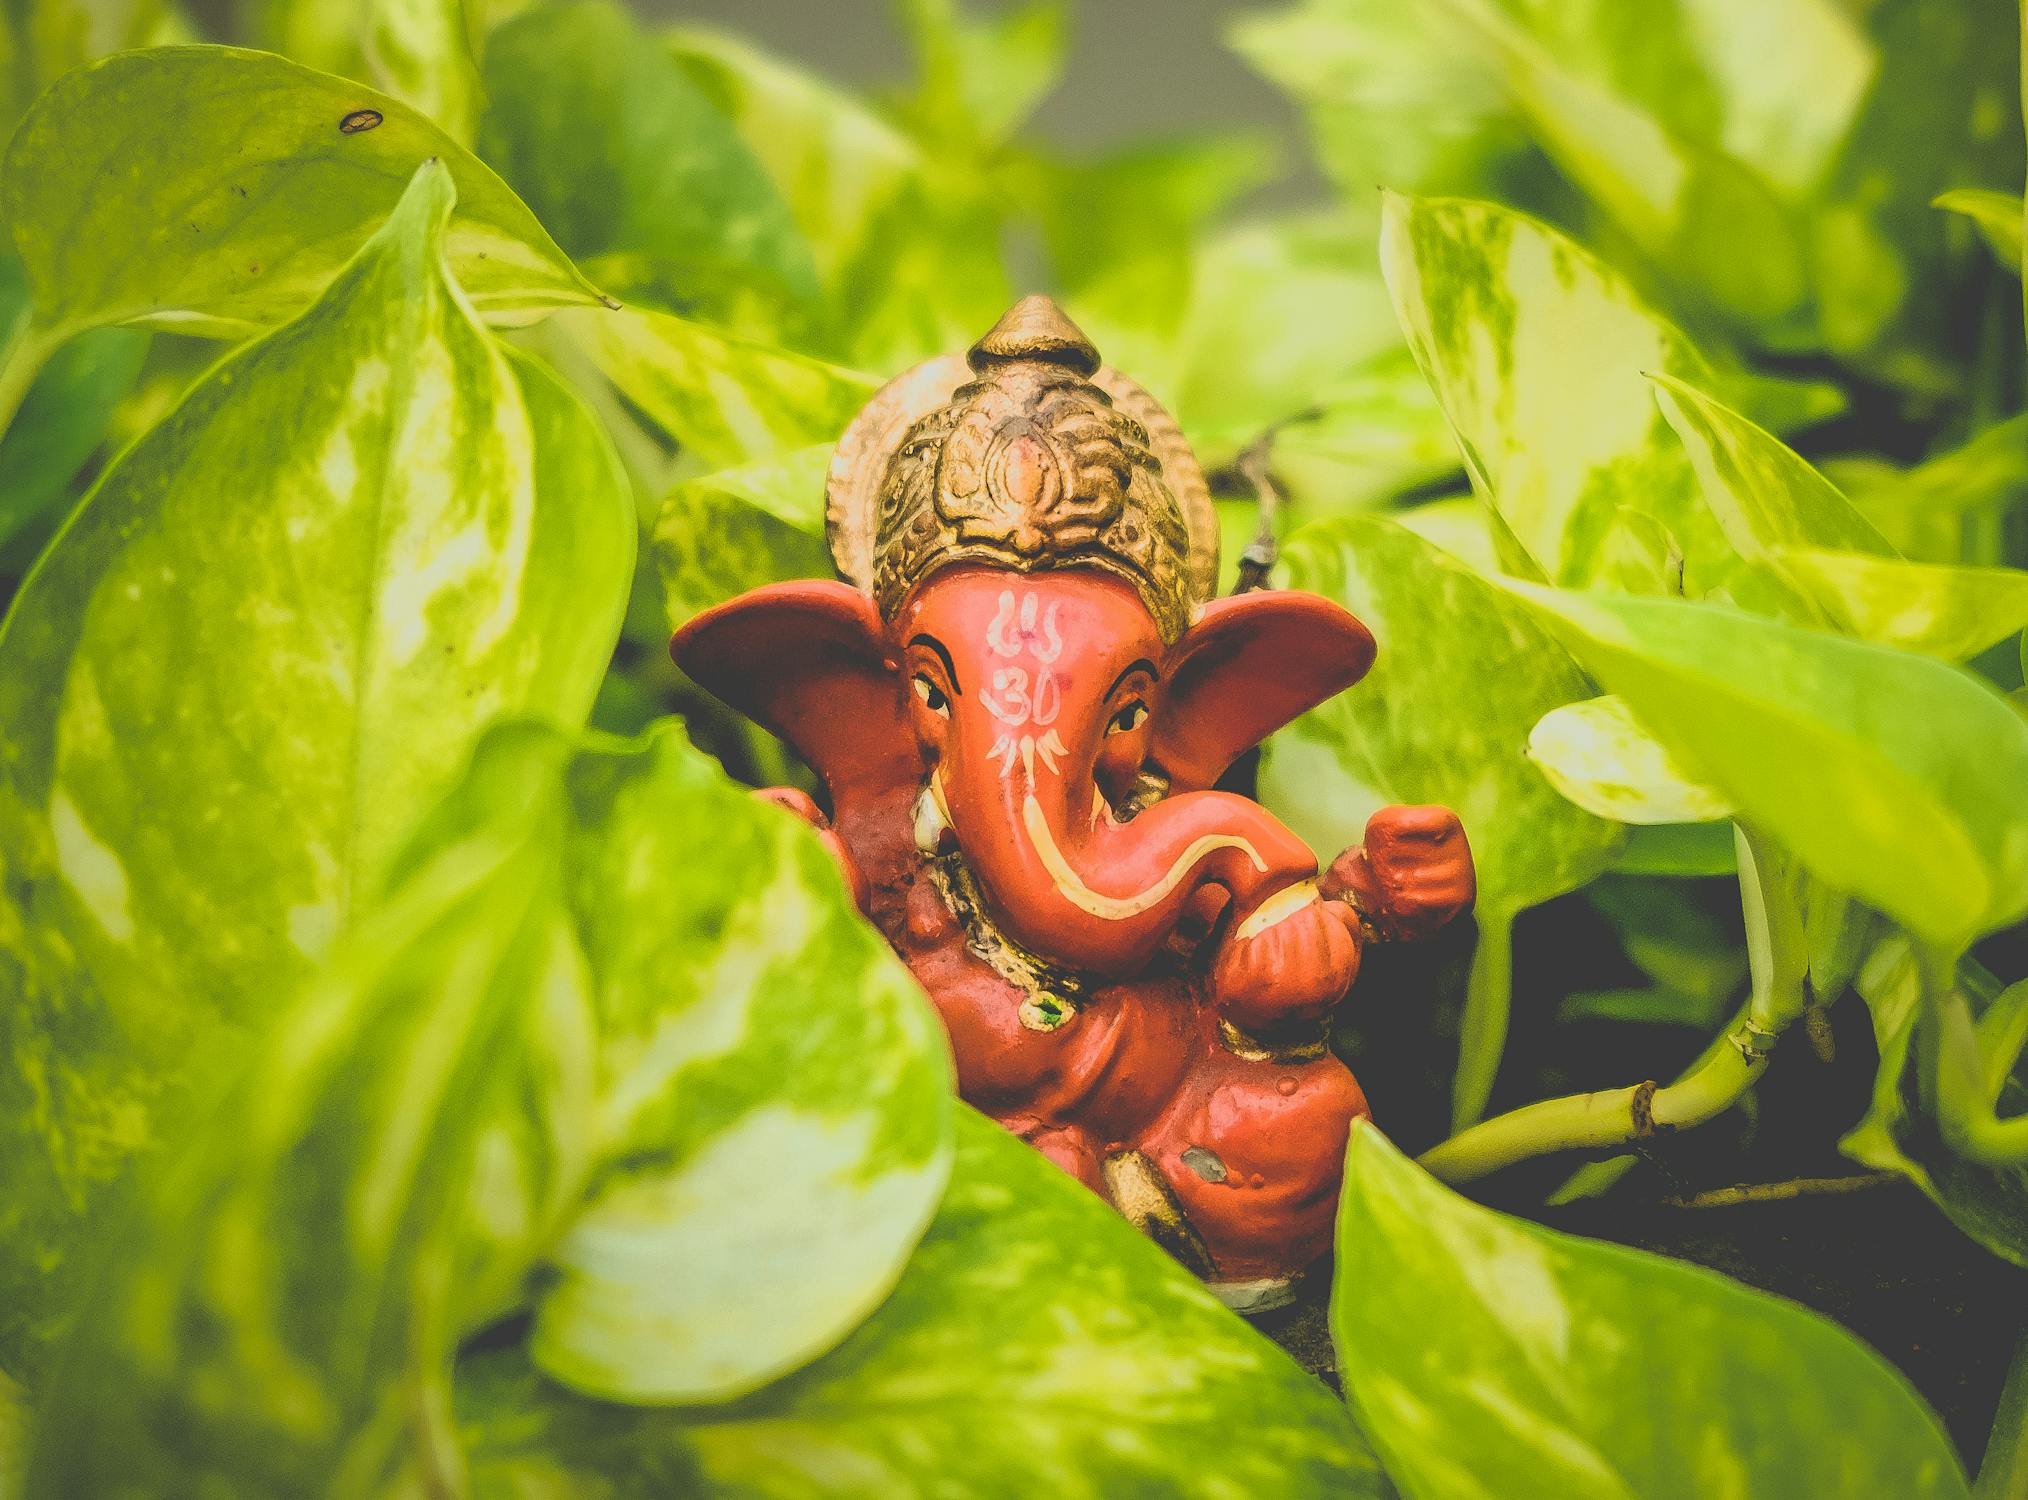 Lord Ganesha Photo by Aarti Vijay from Pexels: https://www.pexels.com/photo/red-ganesha-figurine-2900315/